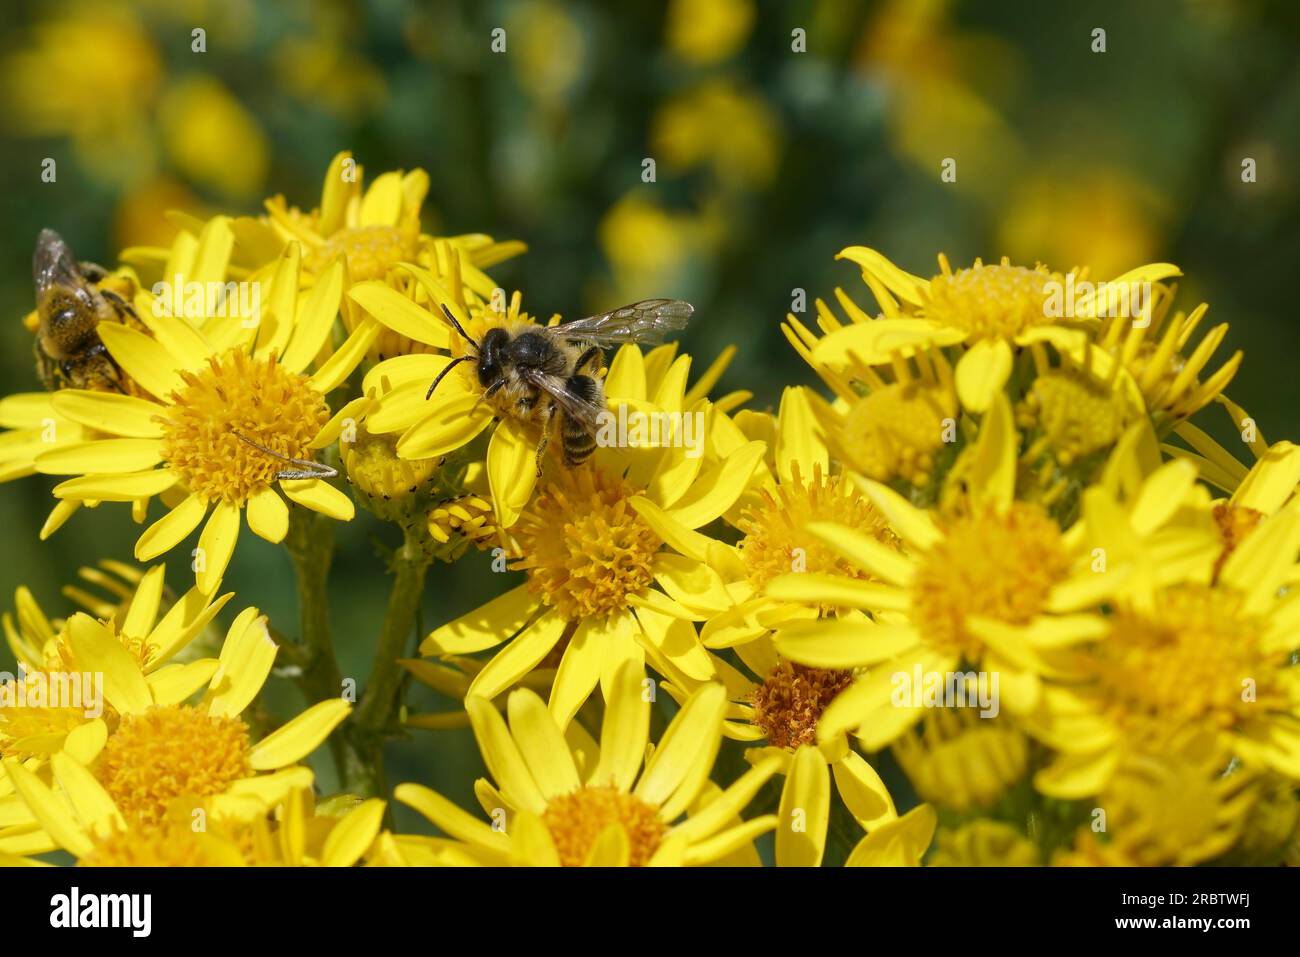 Primer plano en la abeja minera de banda gris, Andrena denticulata en su planta anfitriona, la amarrama amarilla de flores, jacobaea vulgaris Foto de stock